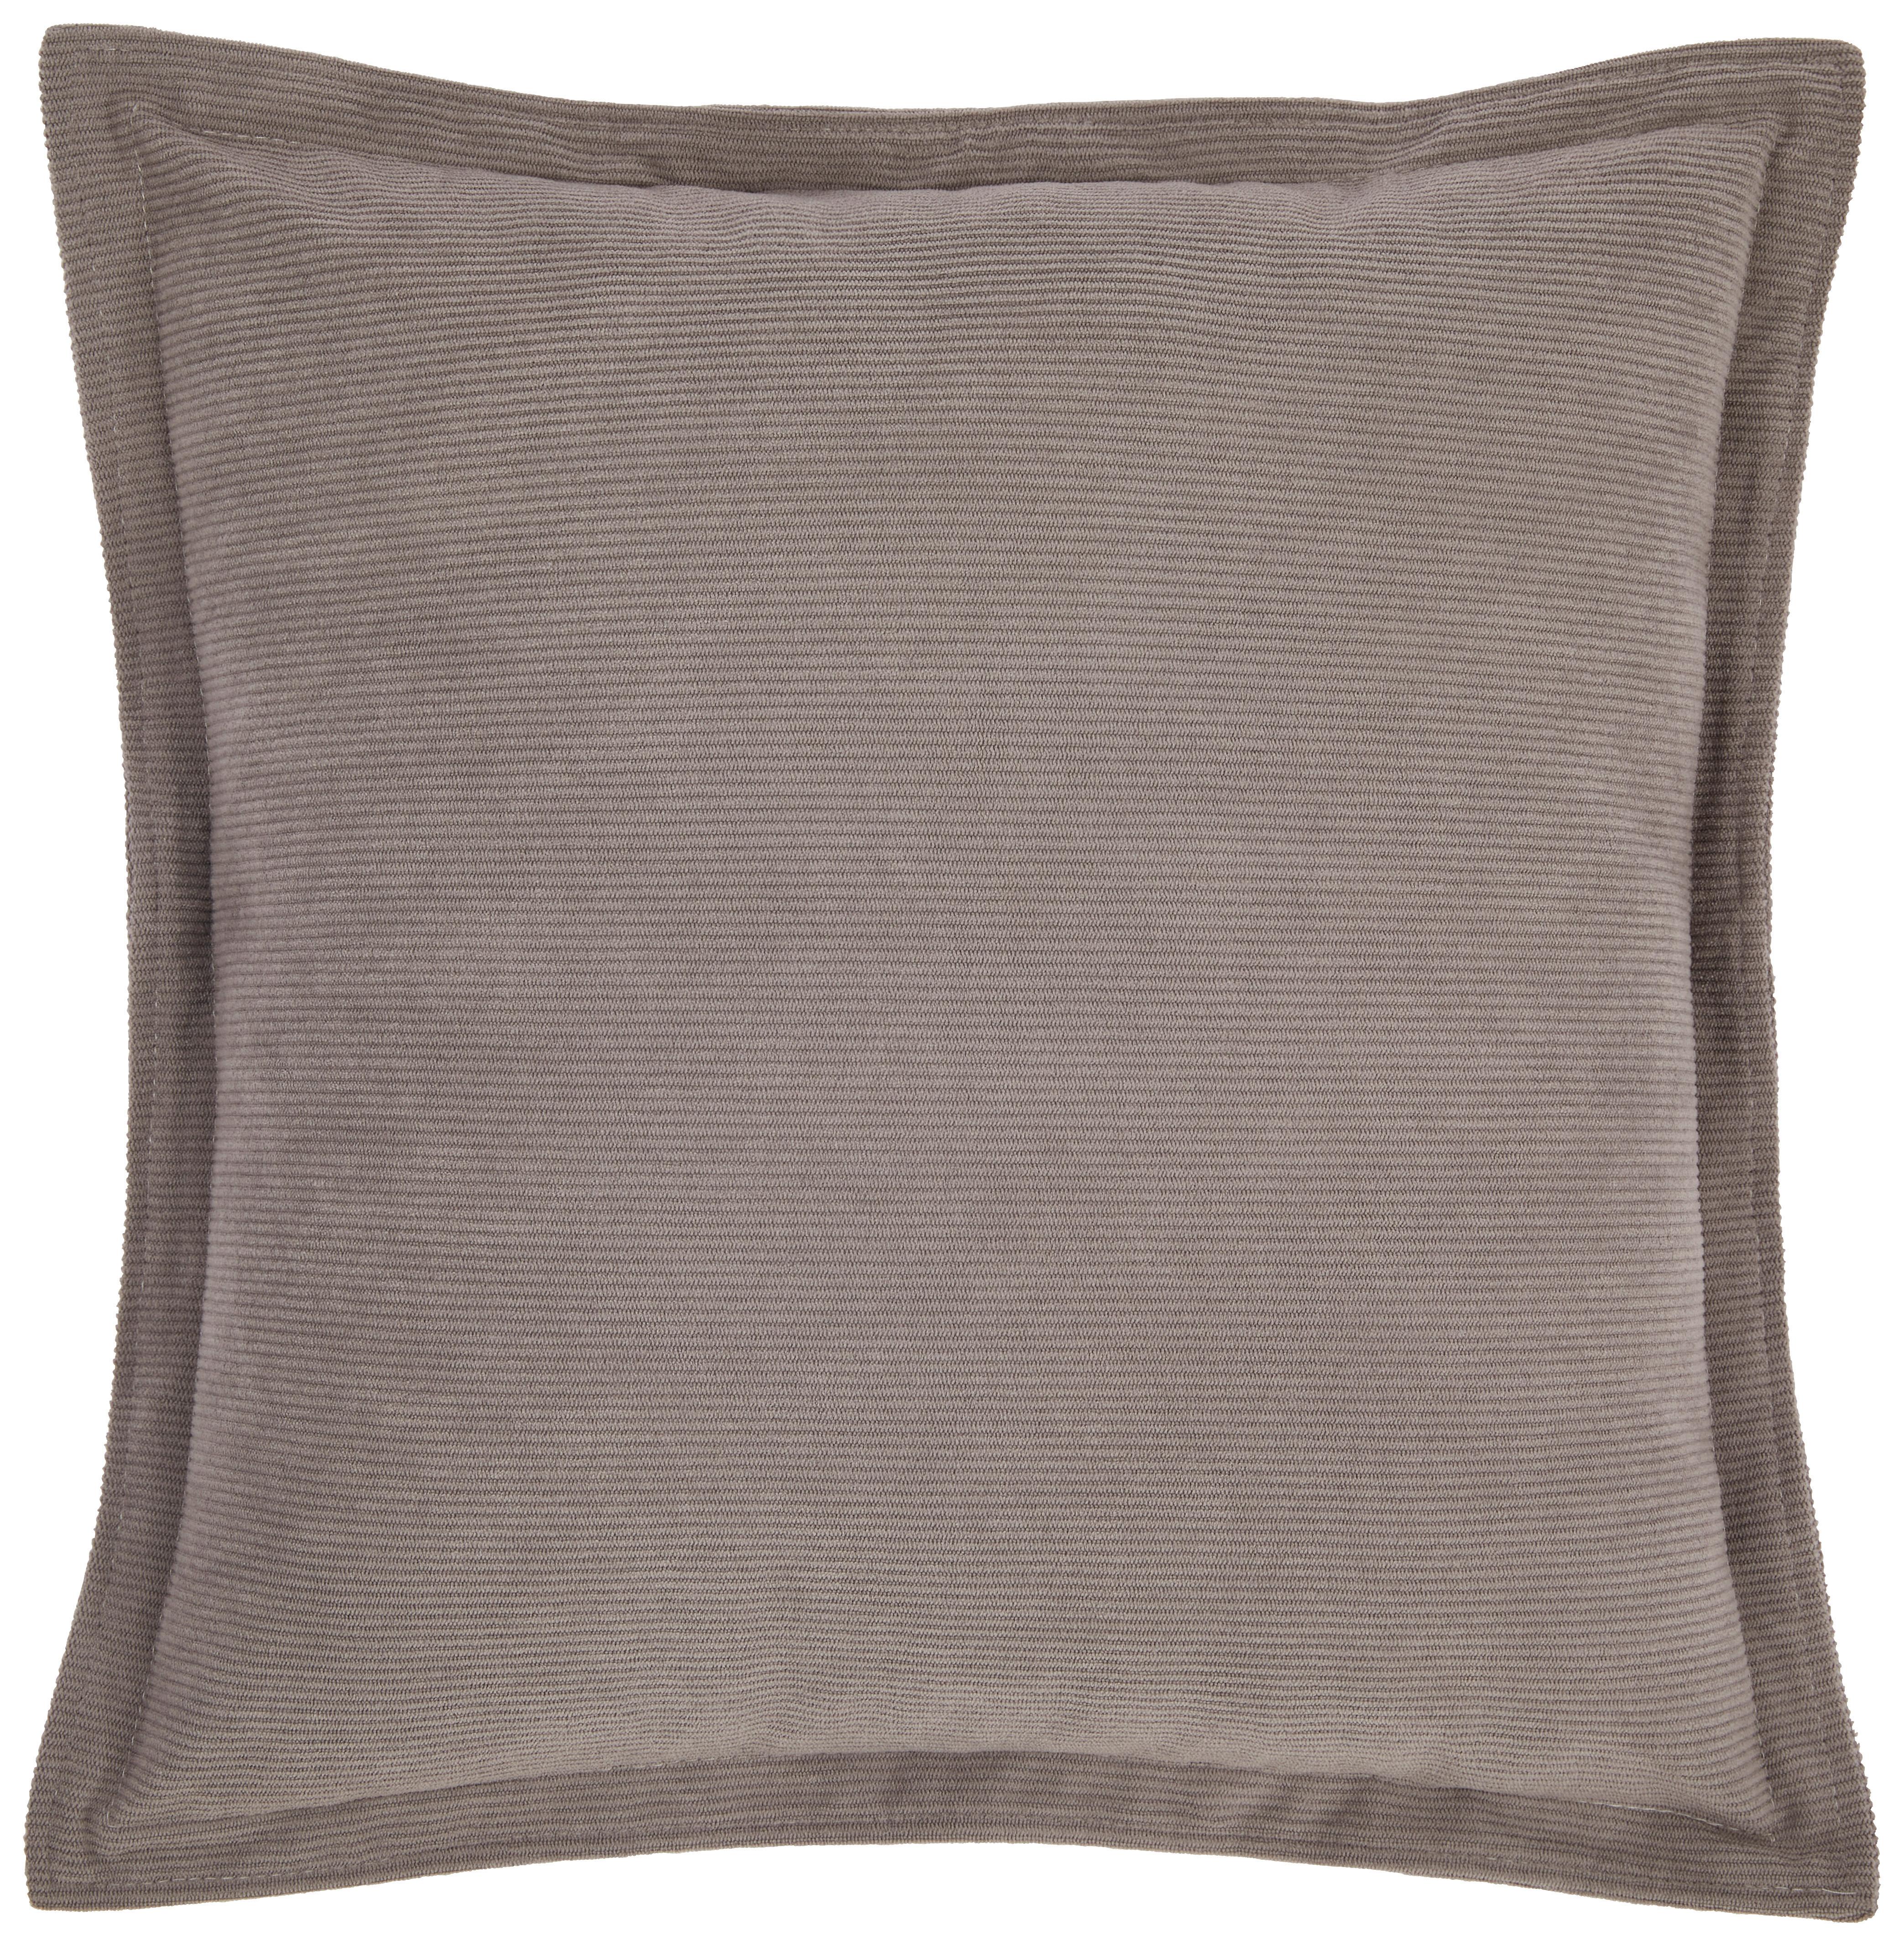 Zierkissen Maren 45x45 cm Polyester Grau mit Zipp - Grau, ROMANTIK / LANDHAUS, Textil (45/45cm) - James Wood